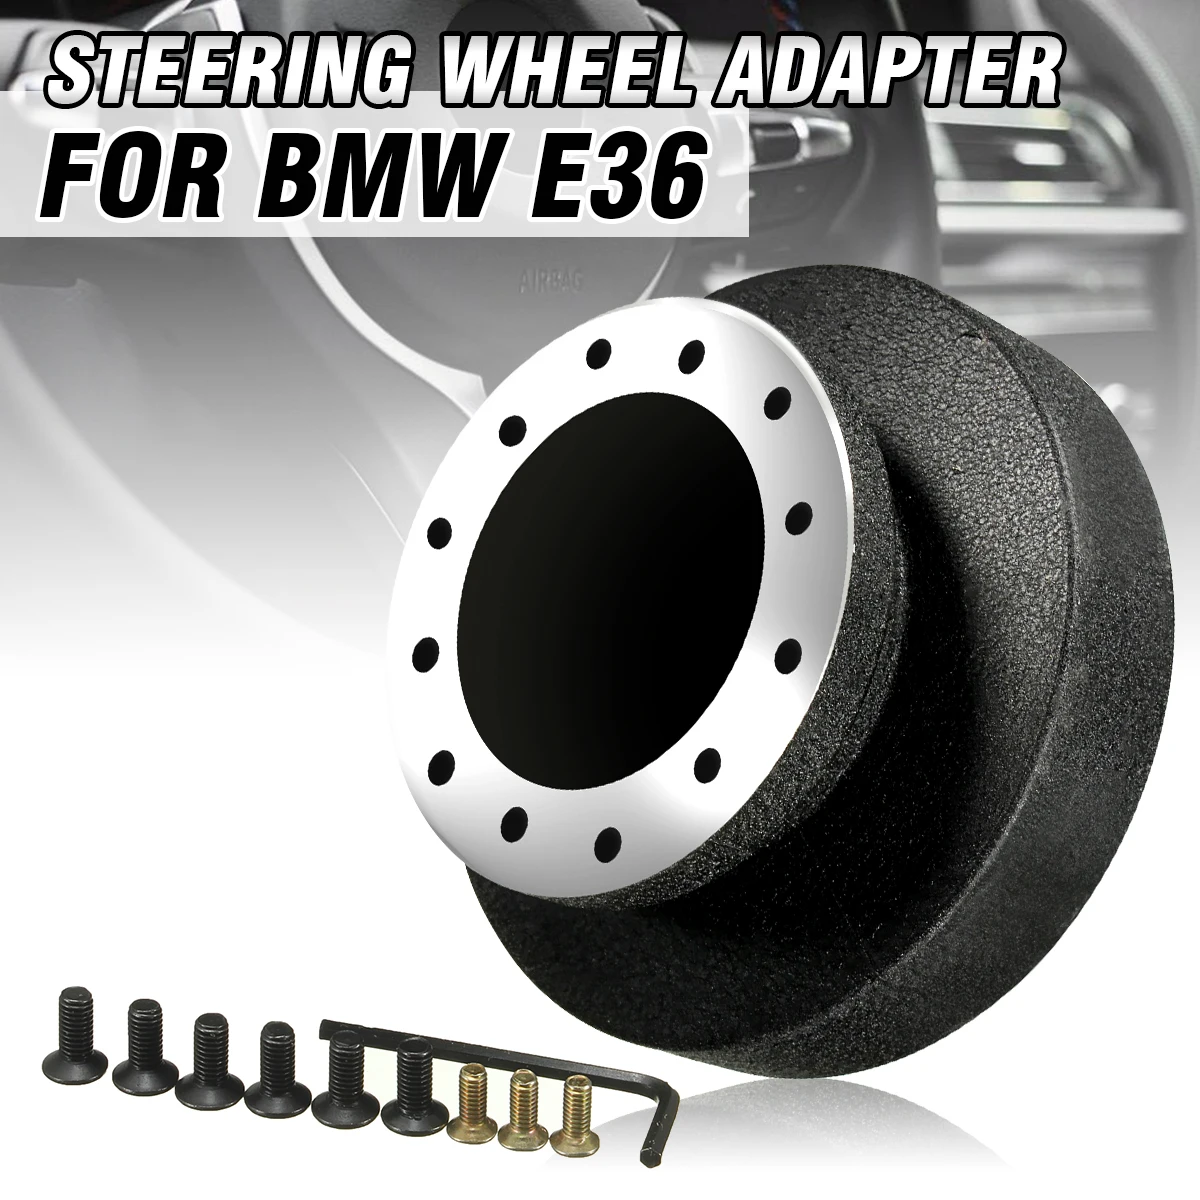 Steering Wheel Racing Hub Adapter Boss Kit Fit For BMW E36 Nardi for Personal Abarth Indy Raid Italvolanti etc